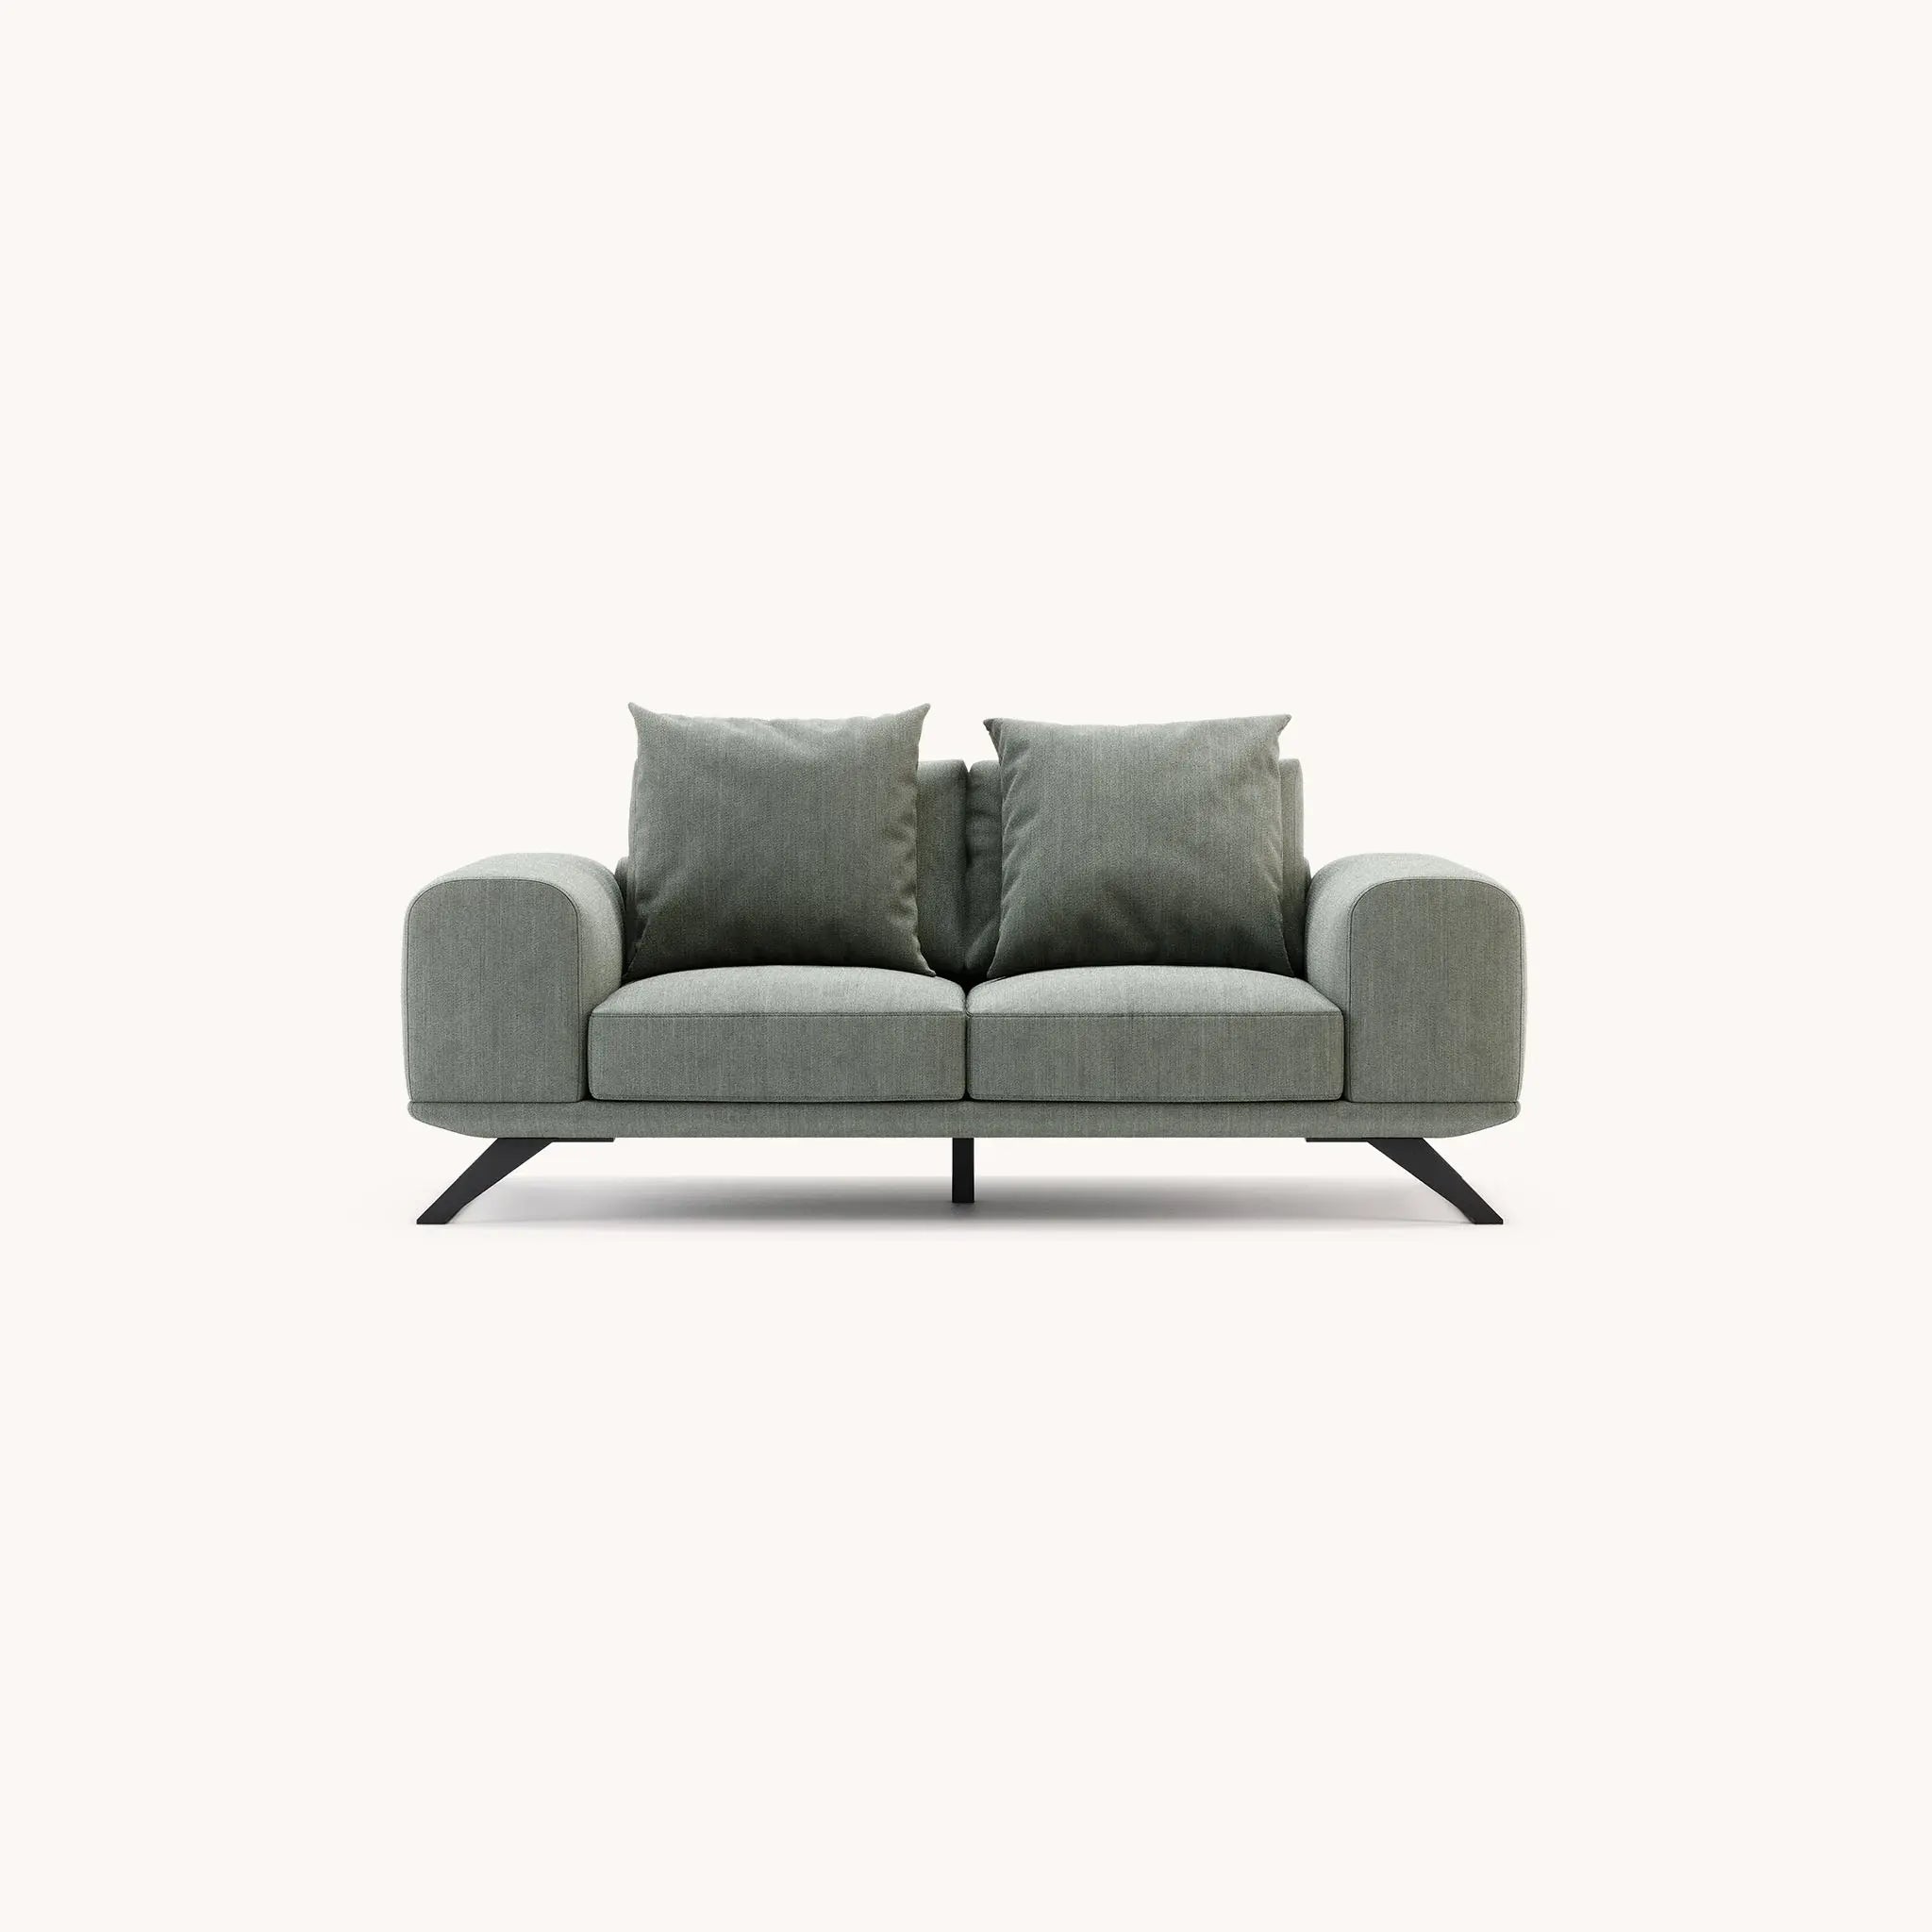 Aniston sofa